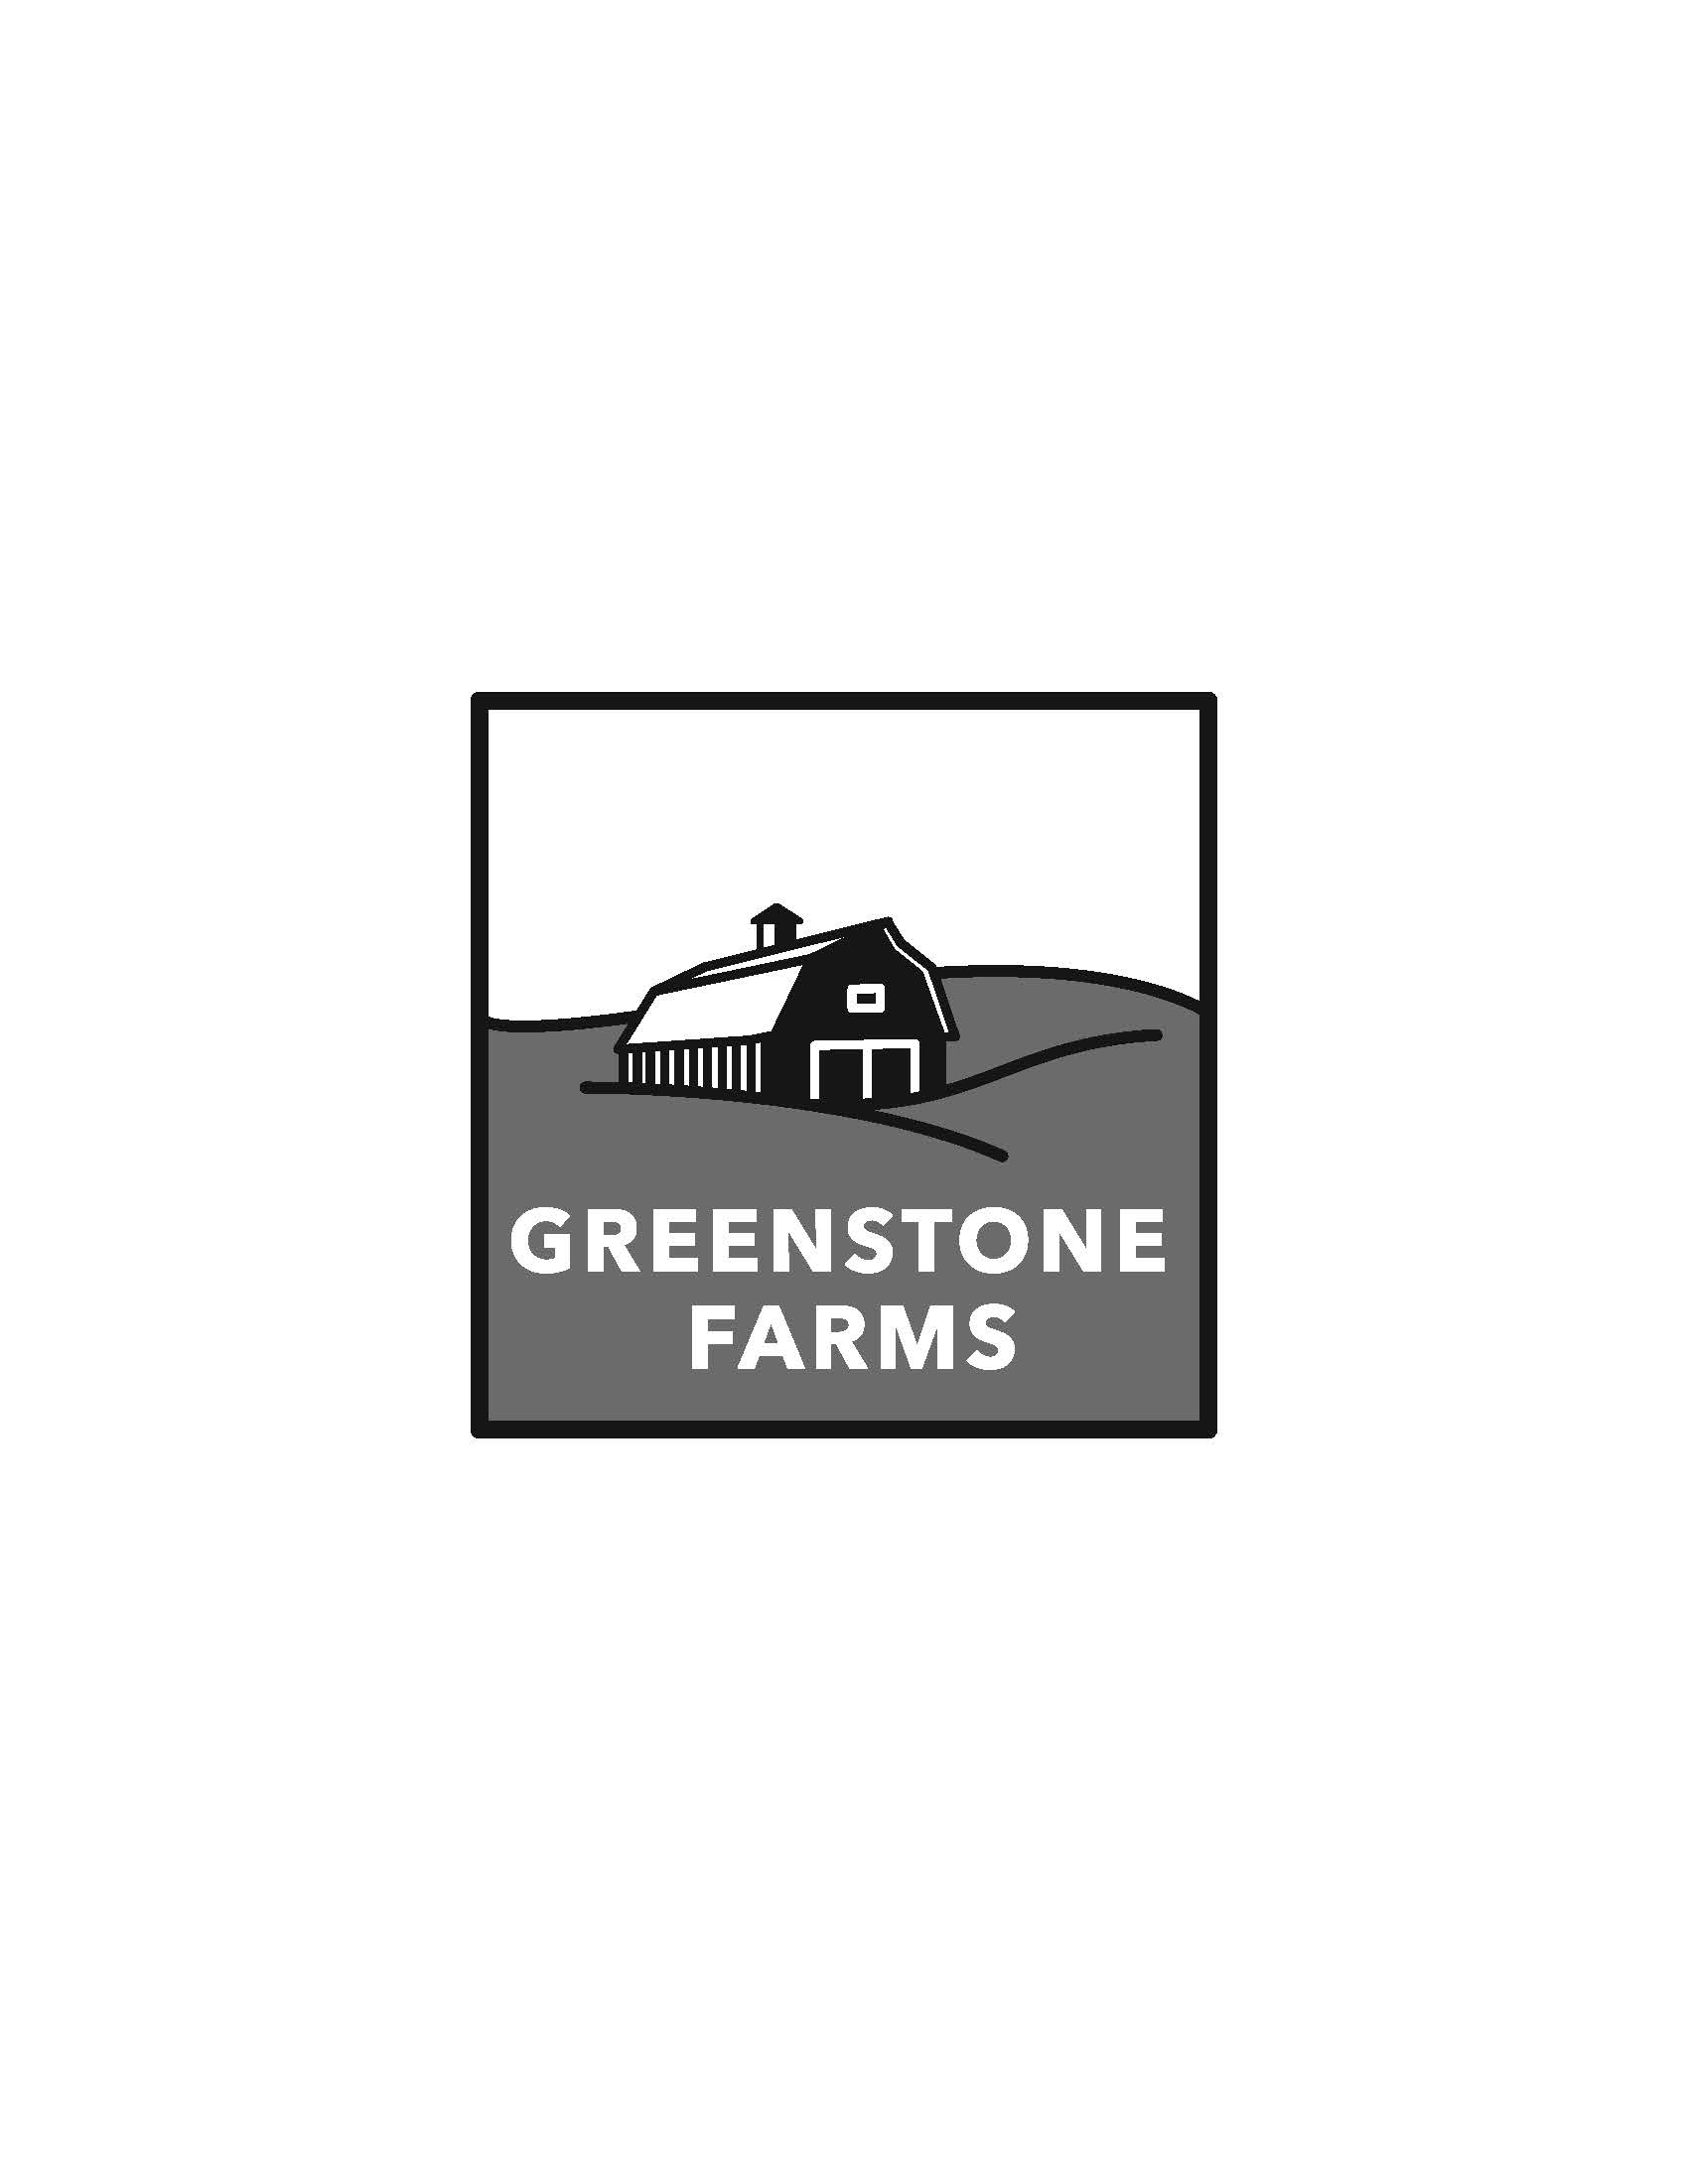 greenstone_logo.10.21.16_Page_2.jpg